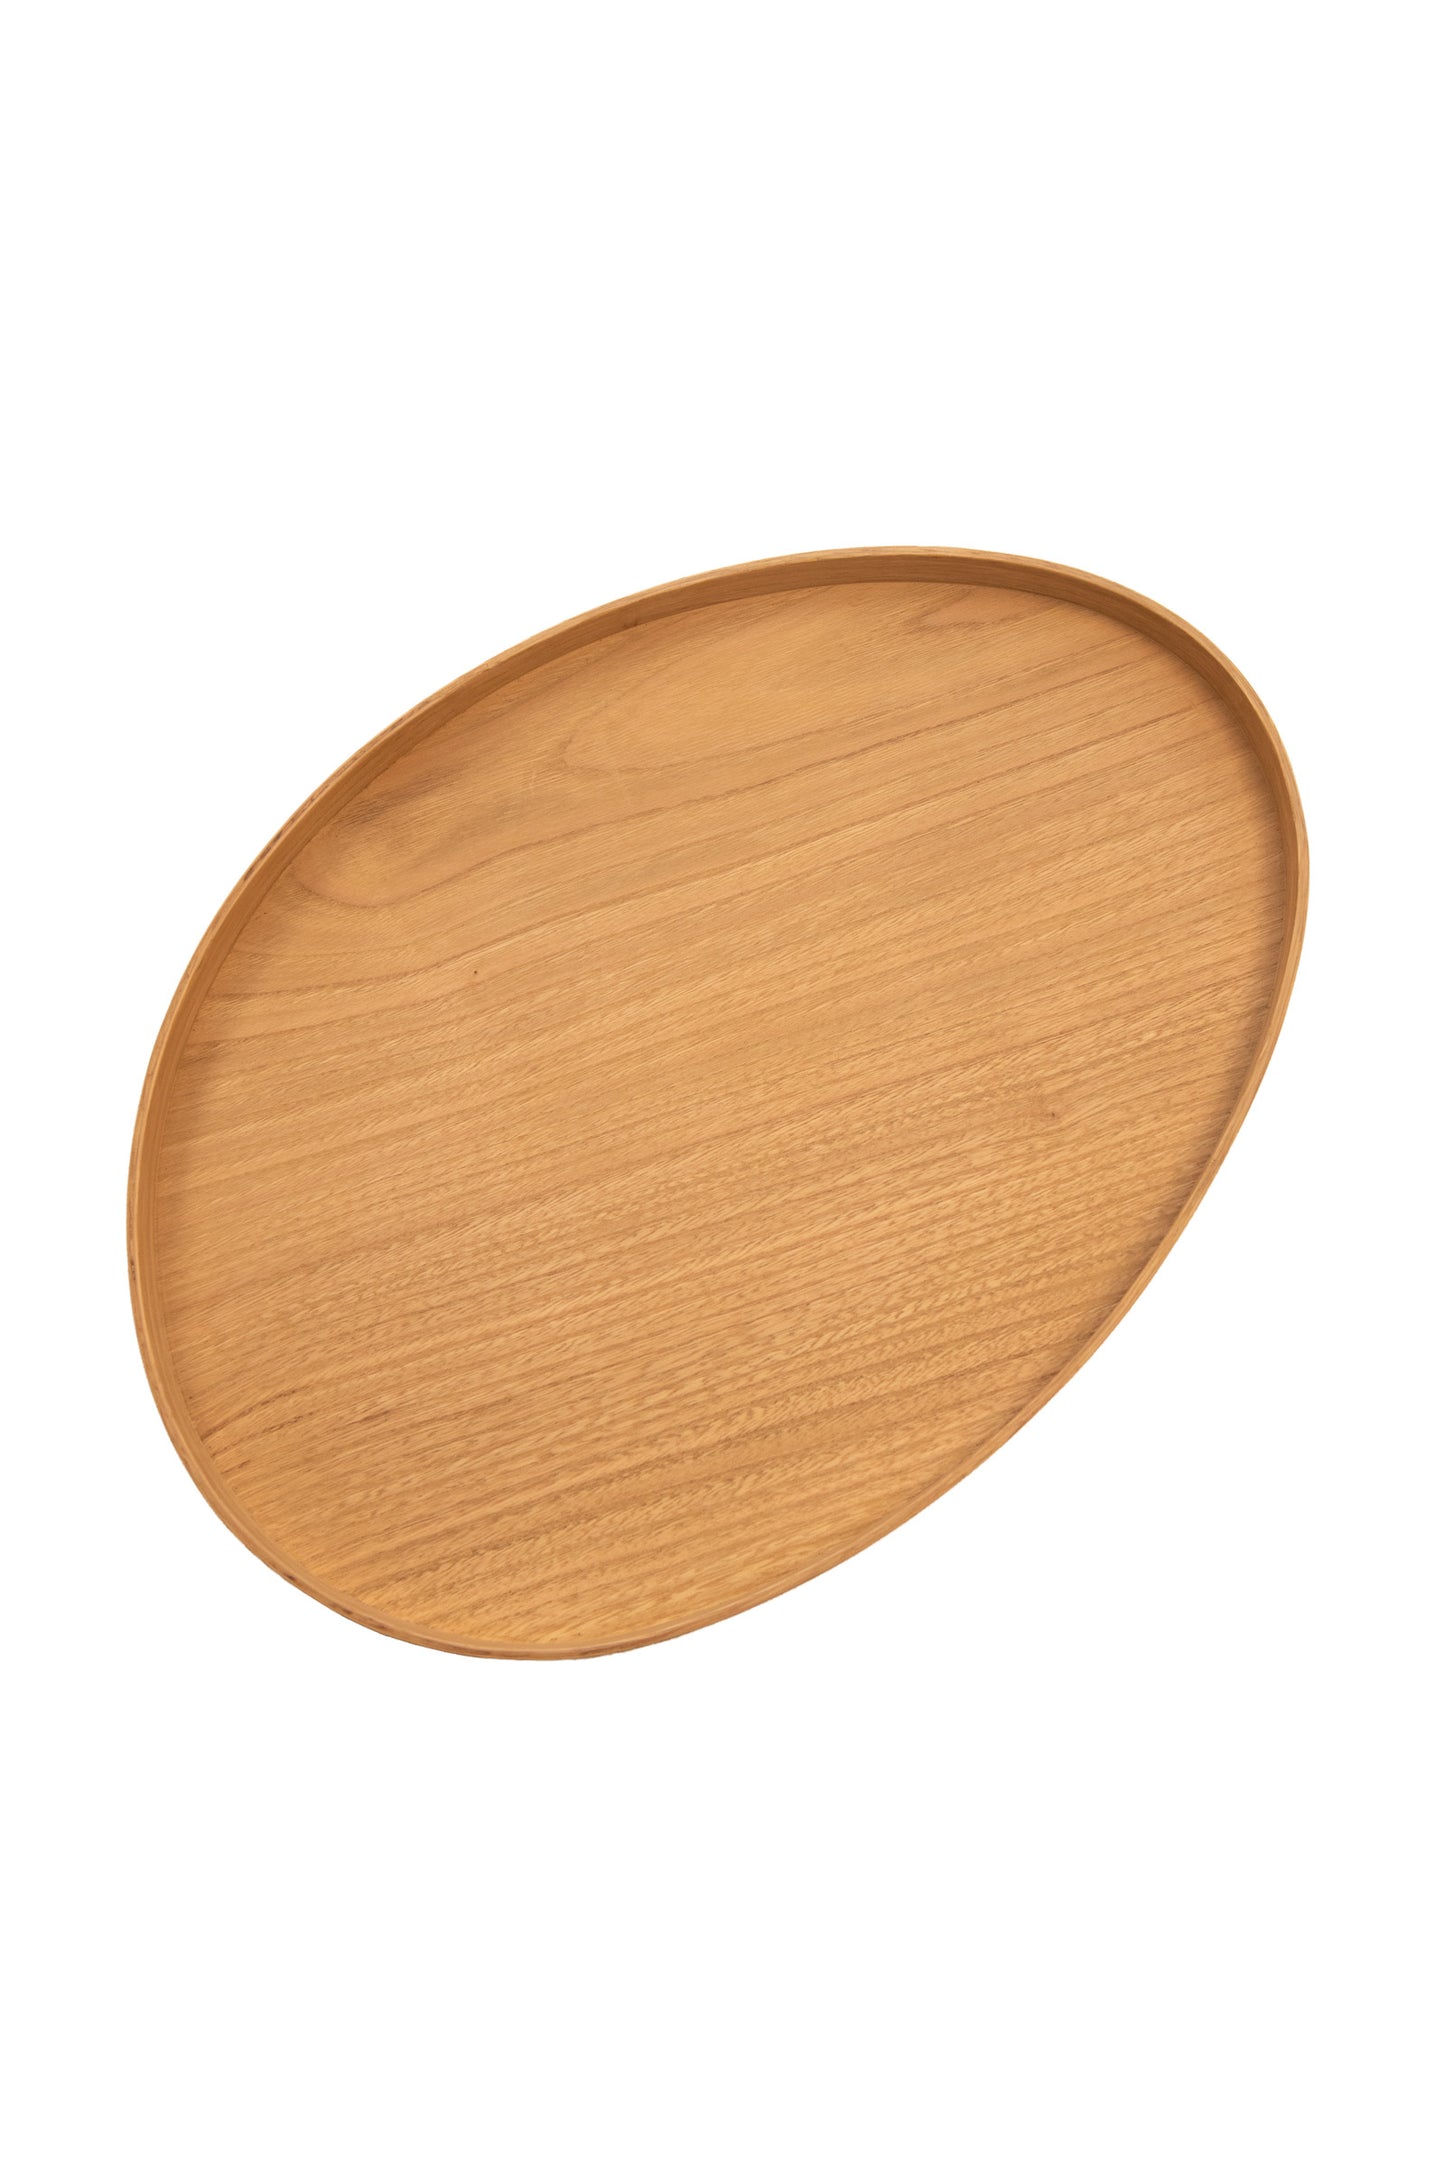 Oeuf, chestnut wood trays